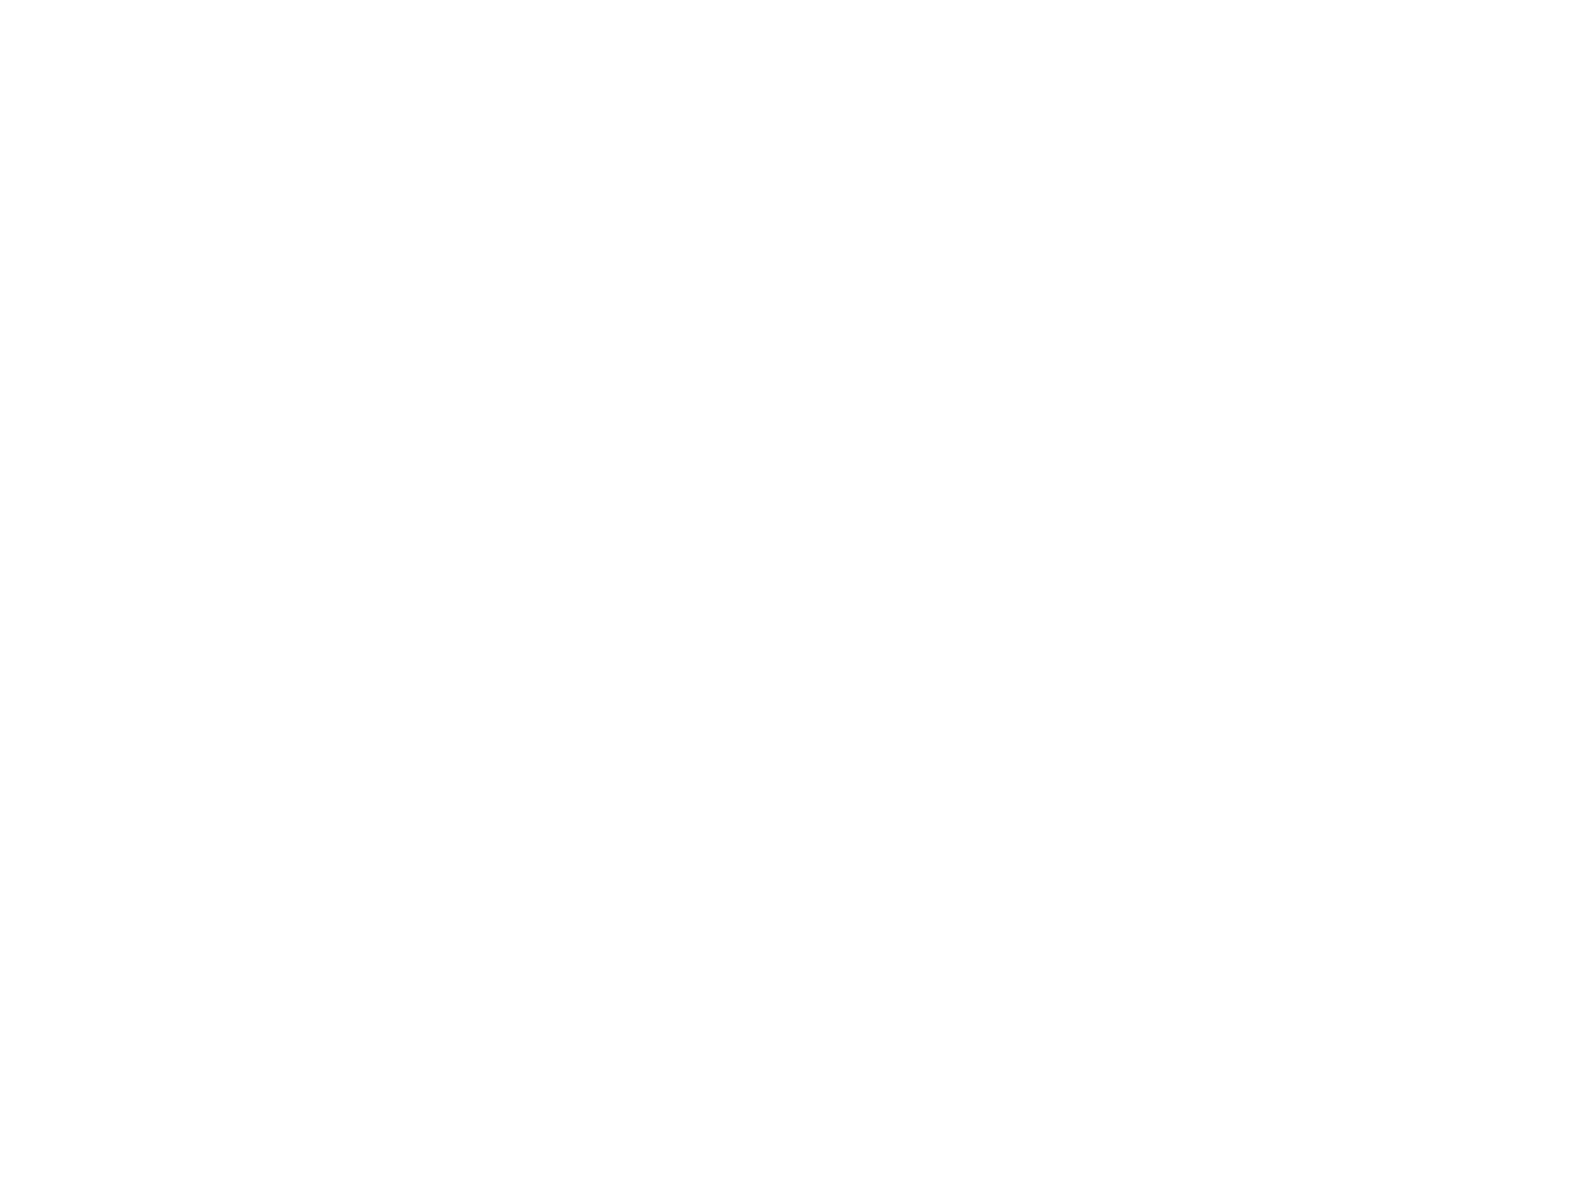 Axalta logo large for dark backgrounds (transparent PNG)